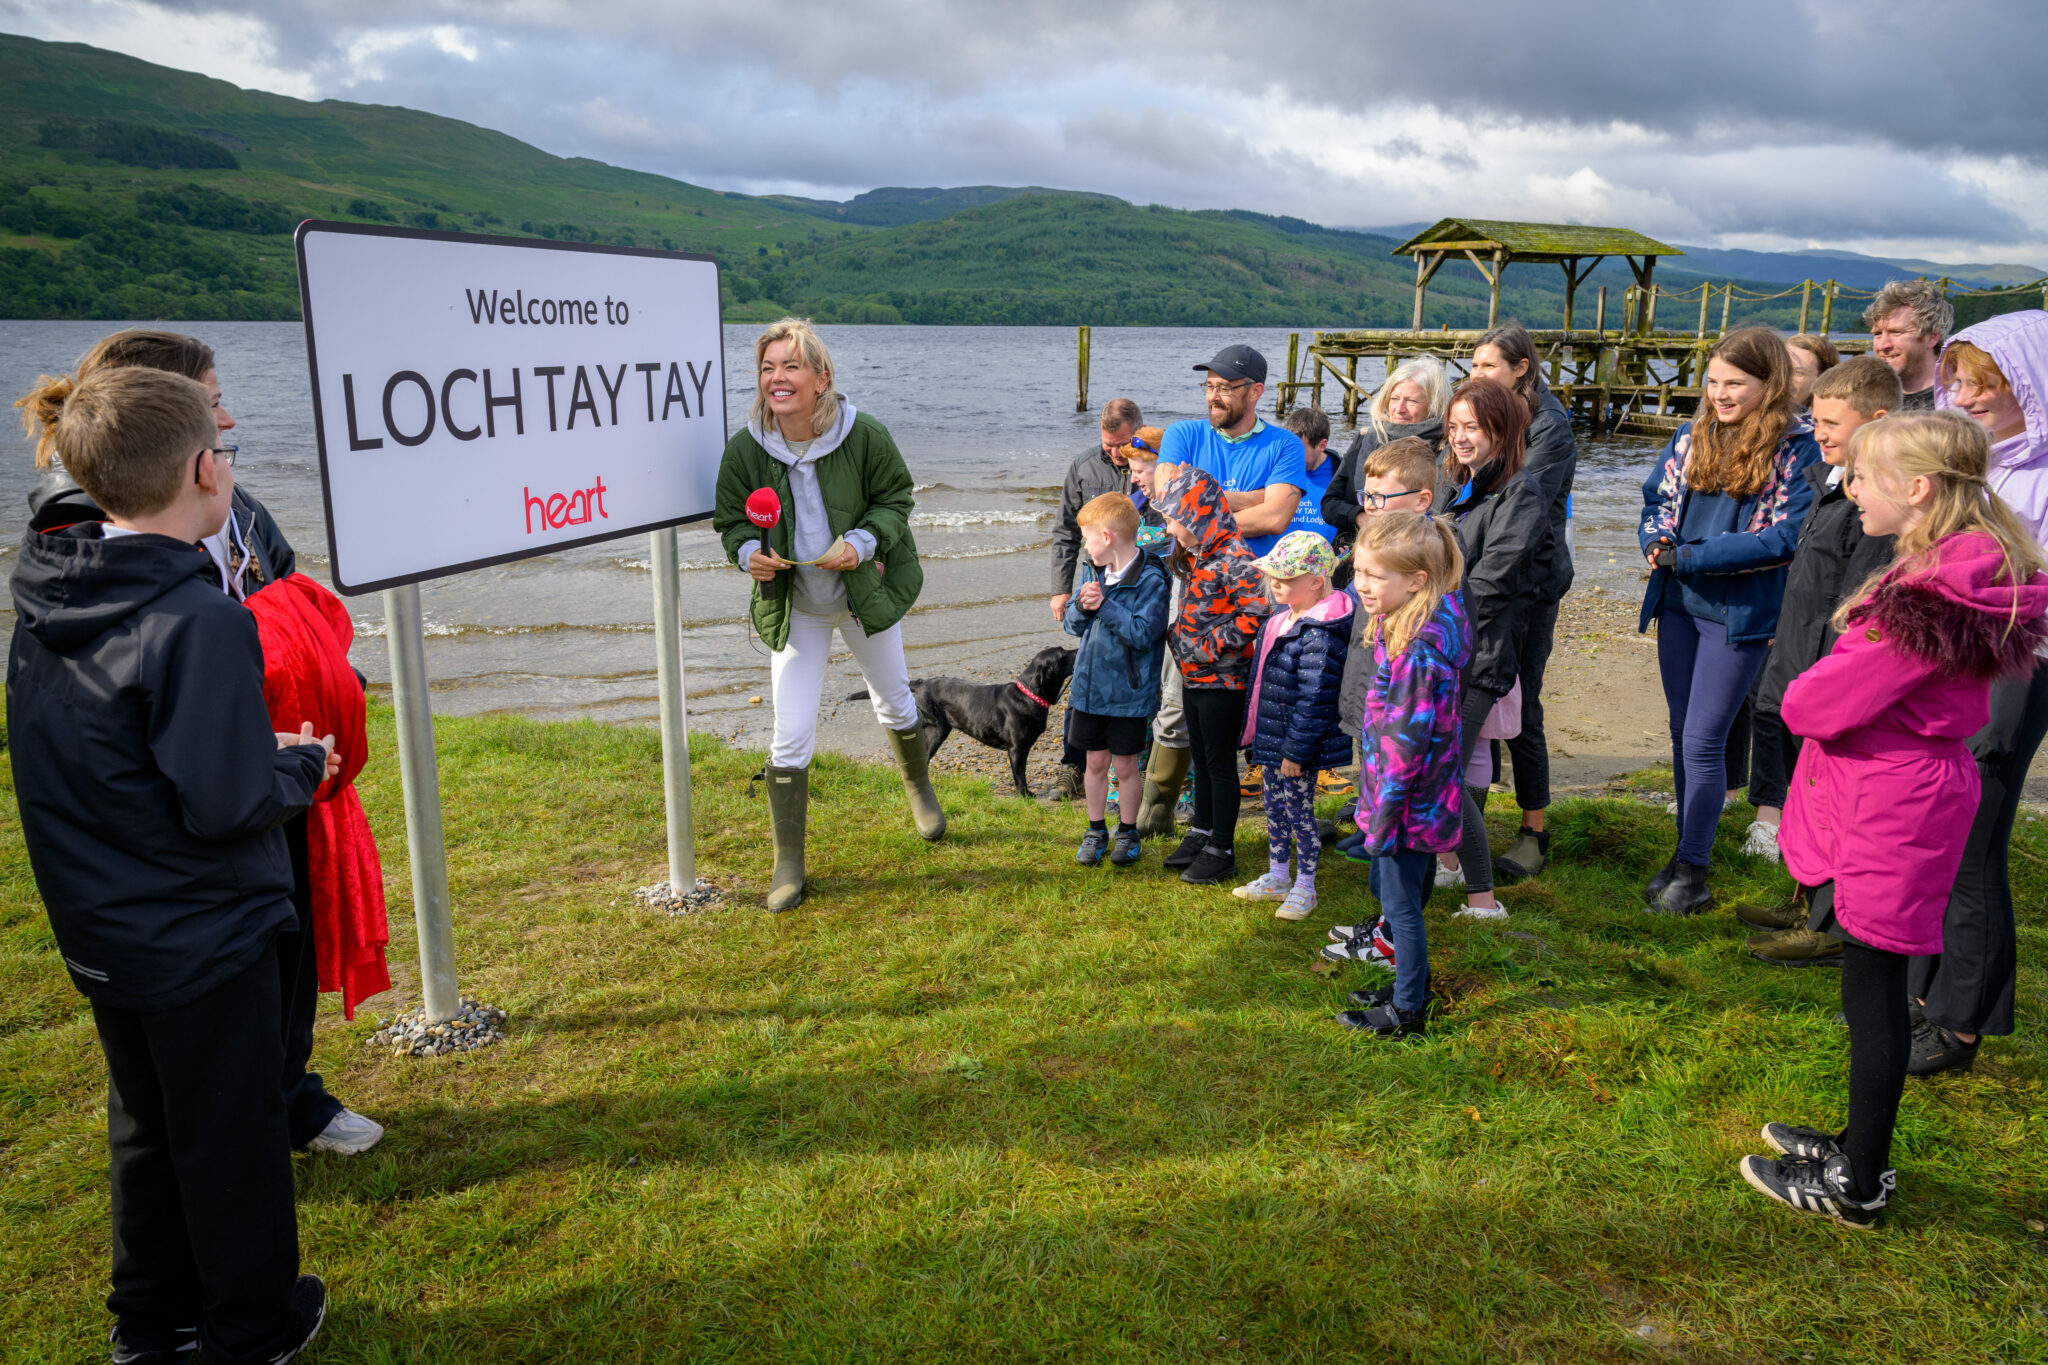 Loch Tay renamed ‘Loch Tay Tay’ in honour of Taylor Swift's UK tour starting in Edinburgh